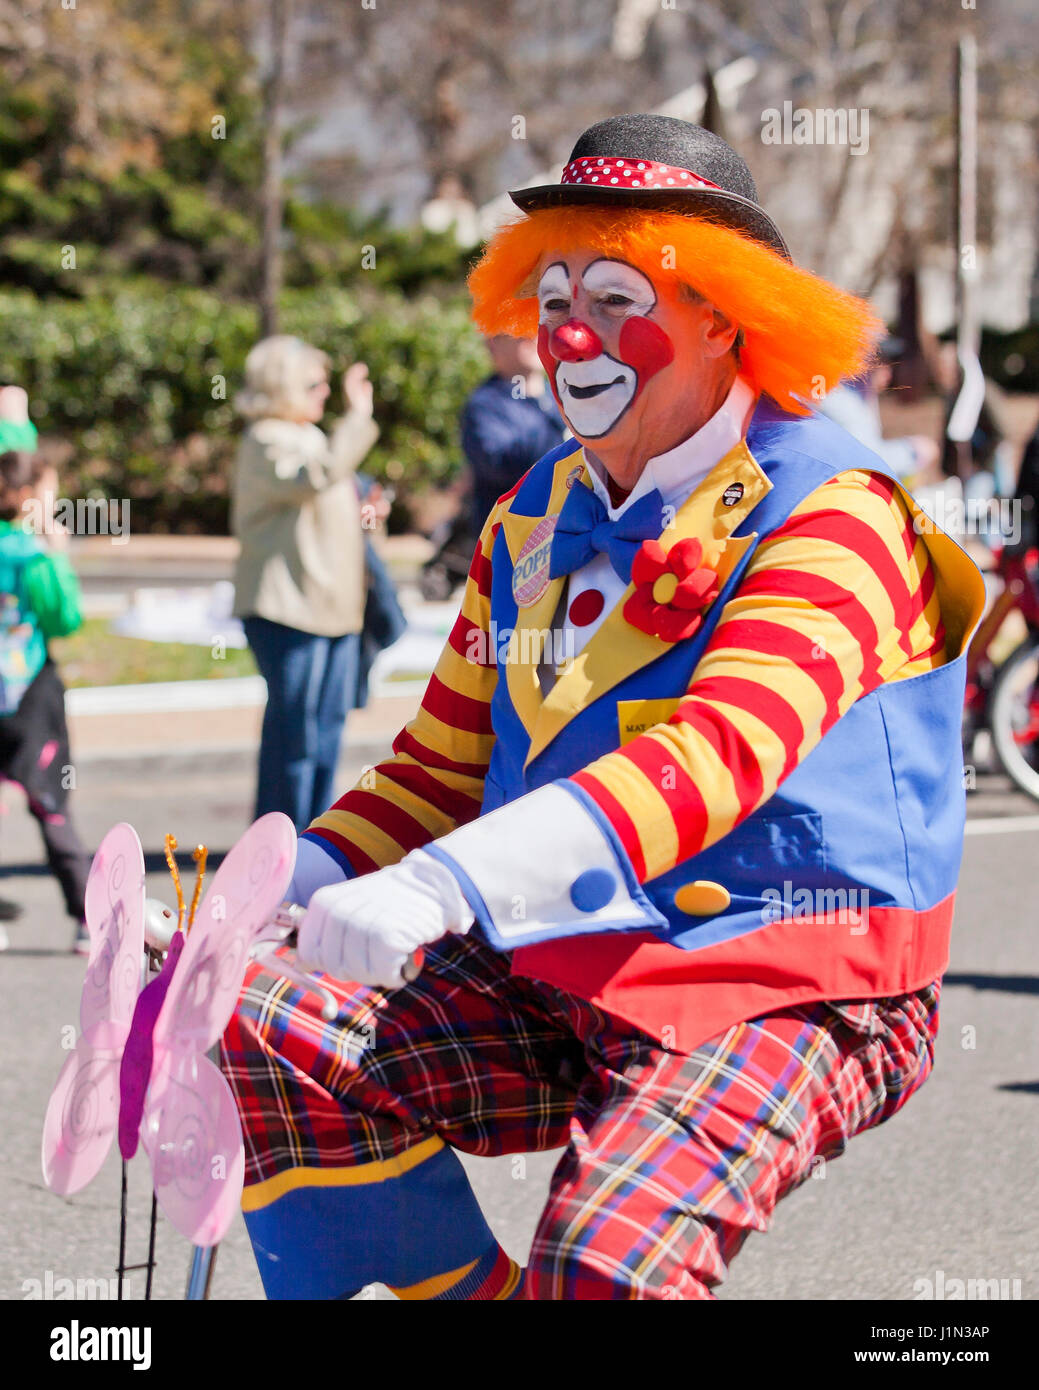 Clown riding bike durante la street parade - USA Foto Stock